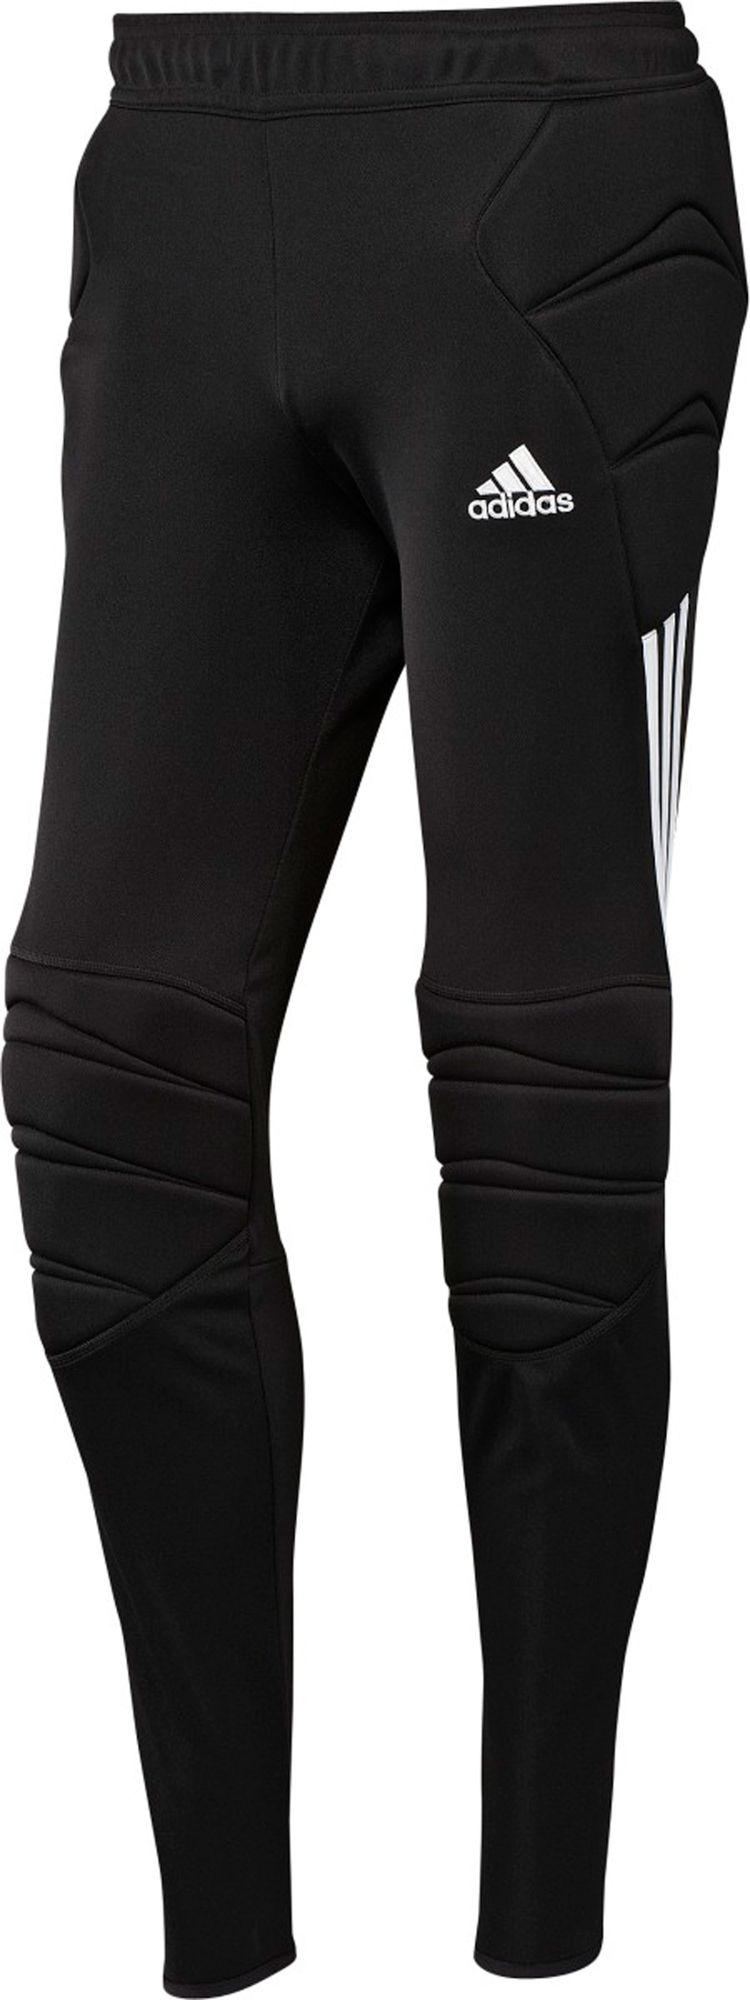 adidas Men's Tierro Goalkeeper Soccer Pants - .97